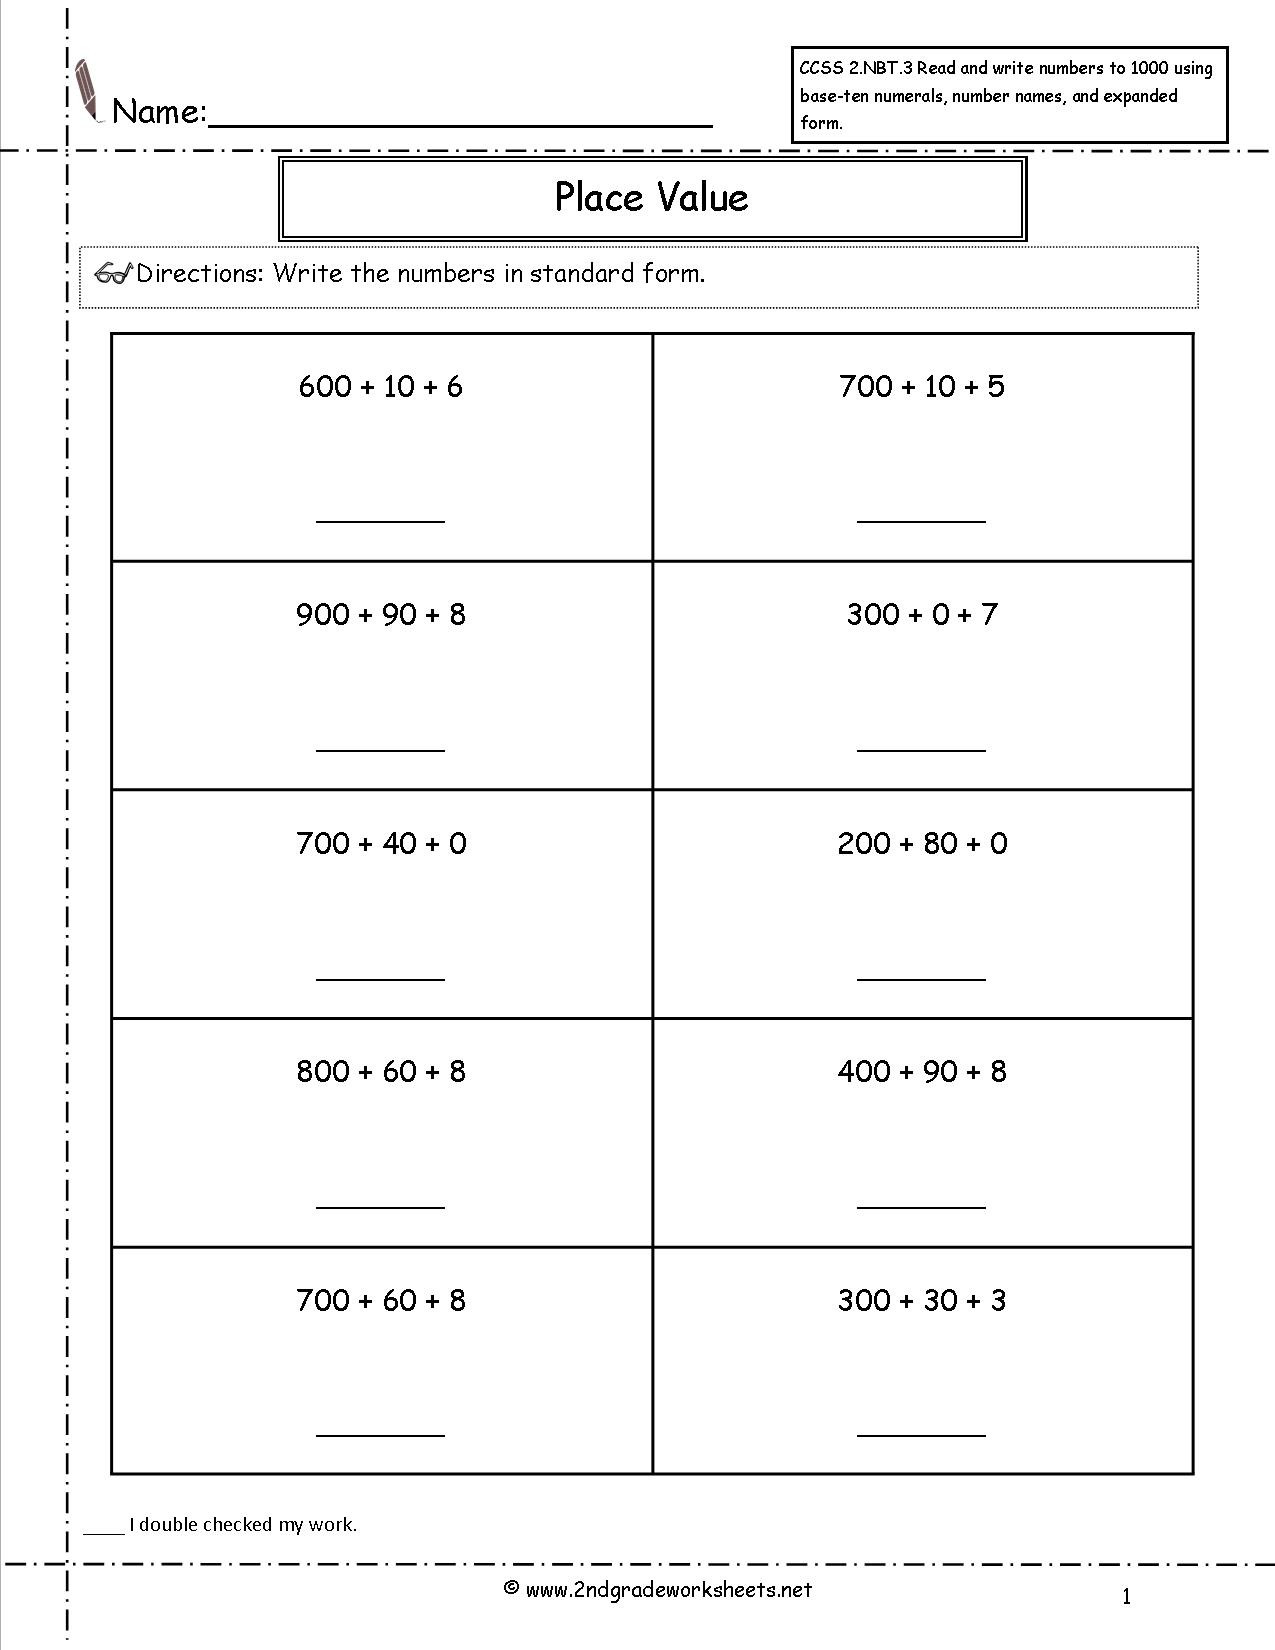 Expanded form Worksheets 1st Grade Ccss 2 Nbt 3 Worksheets Place Value Worksheets Read and